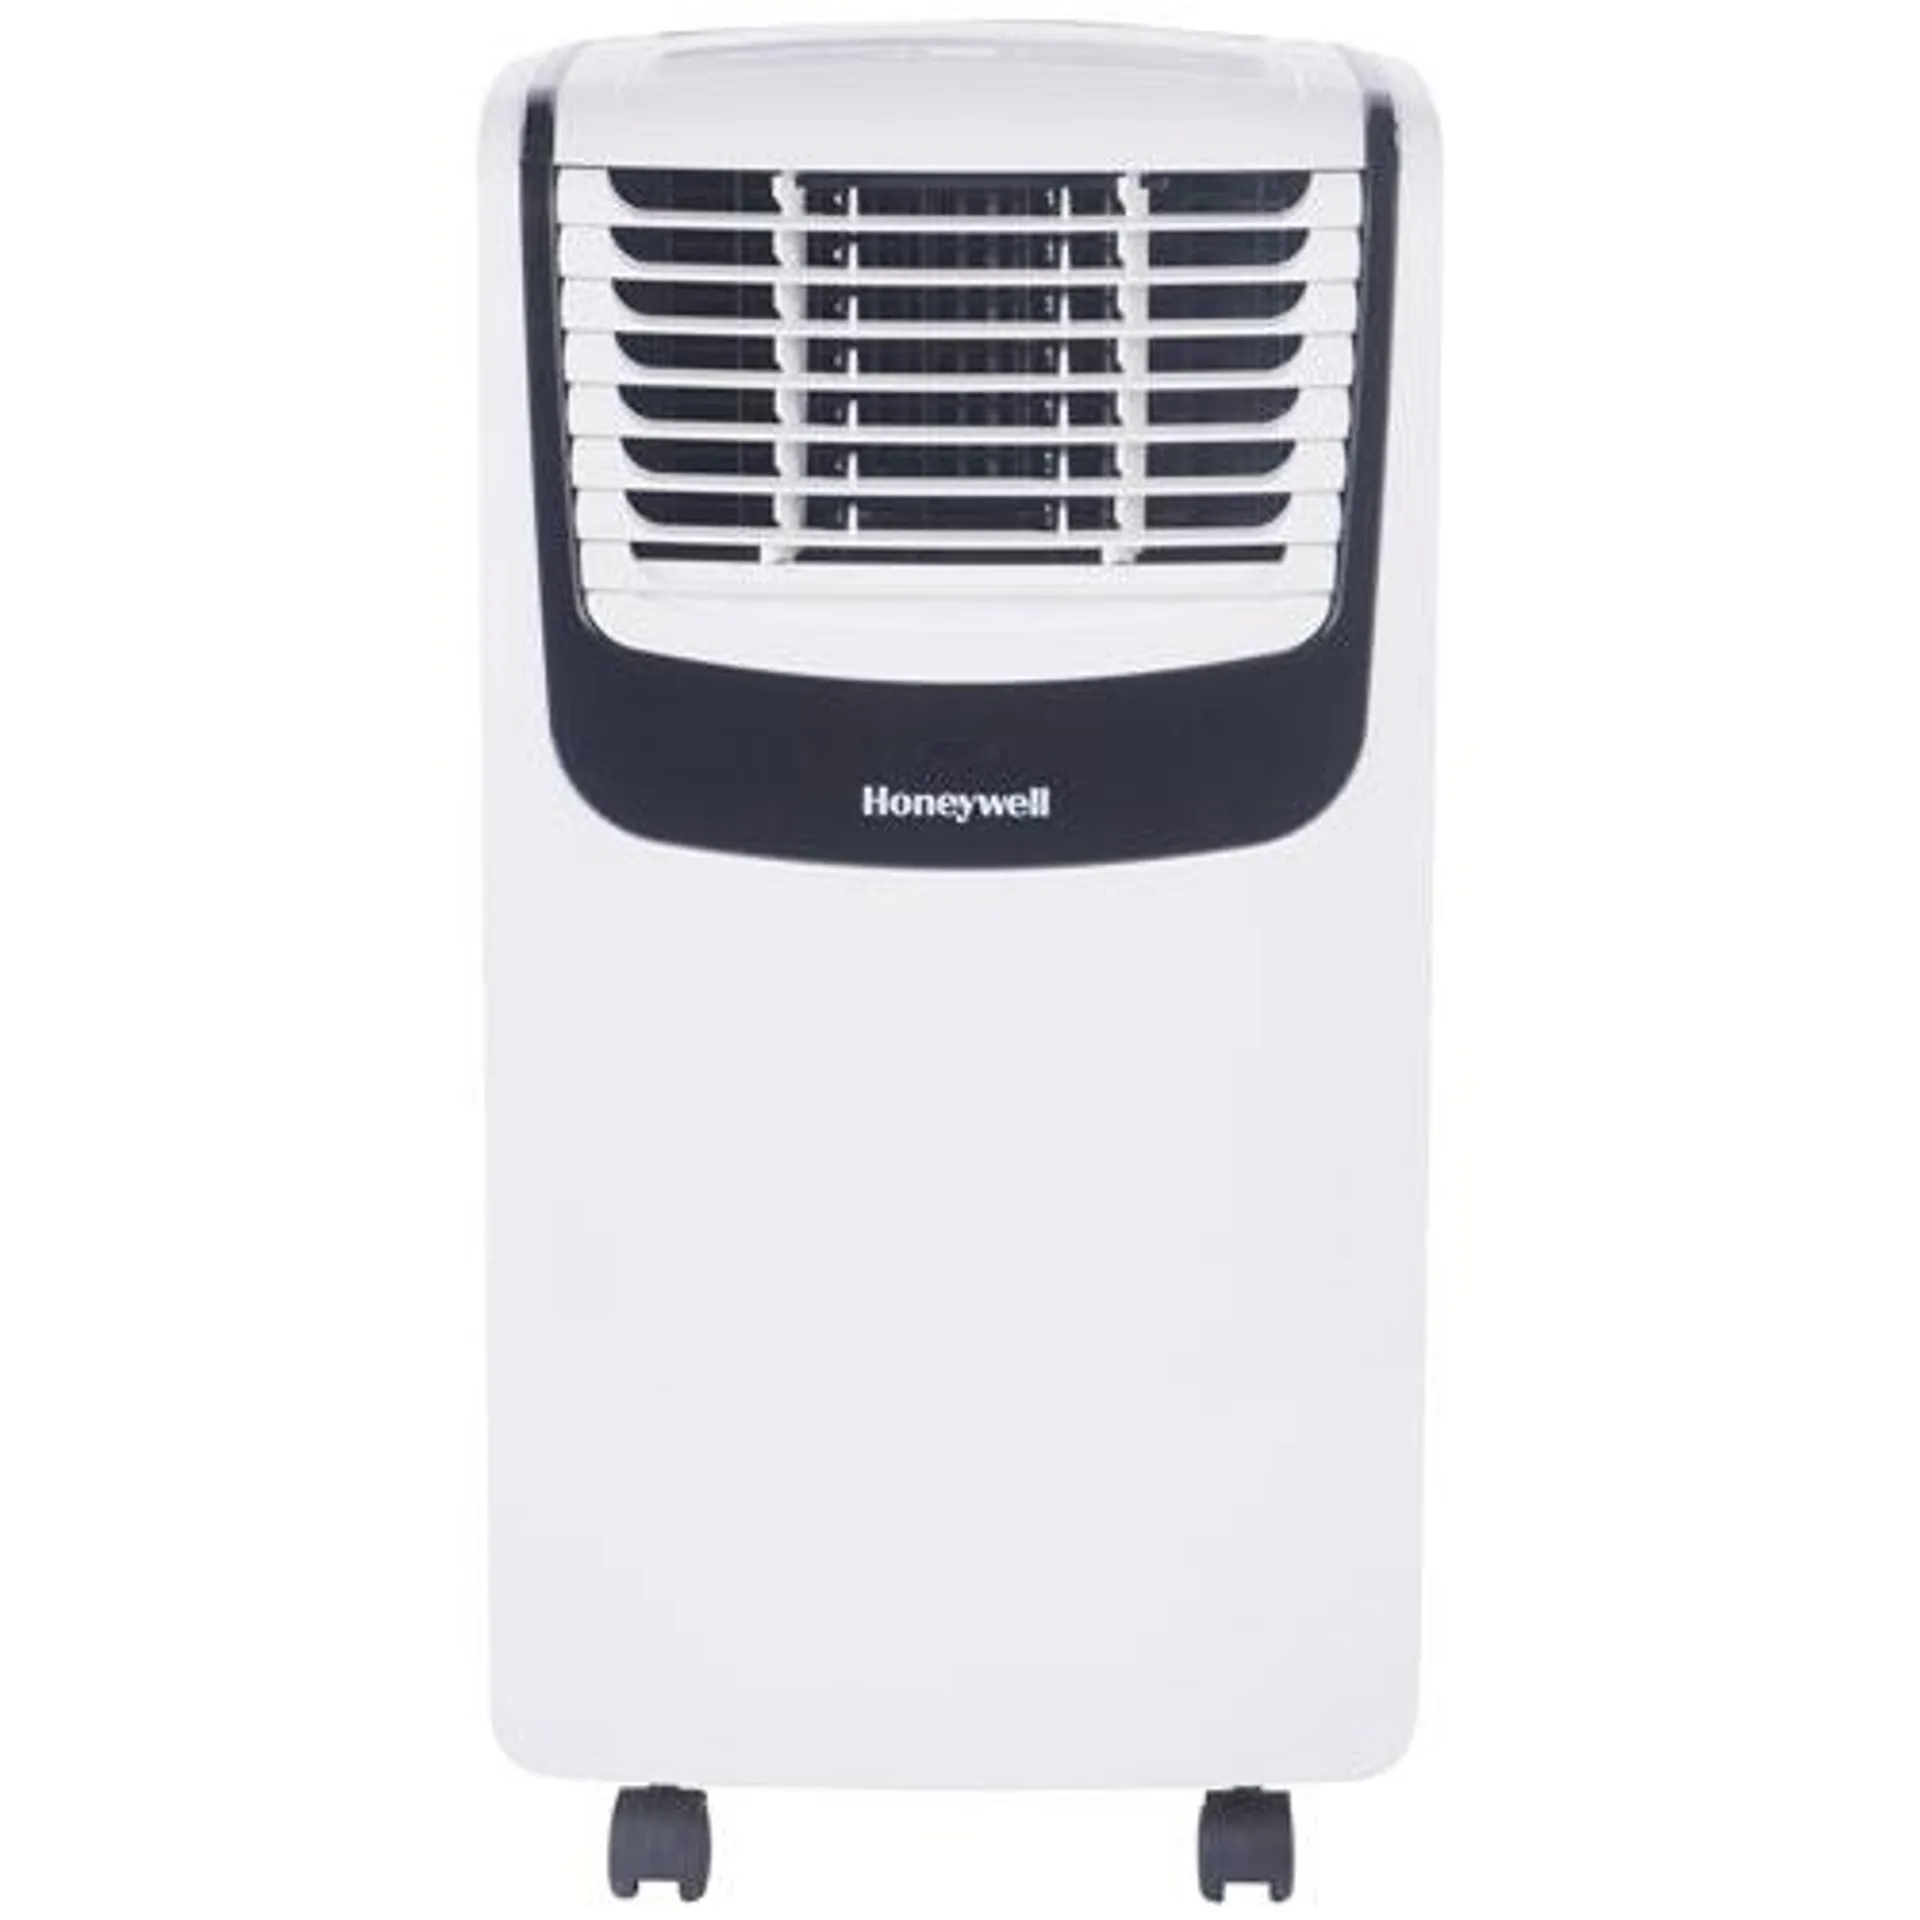 Honeywell Portable Air Conditioner - 10000 BTU (SACC 6800 BTU) - White/Black